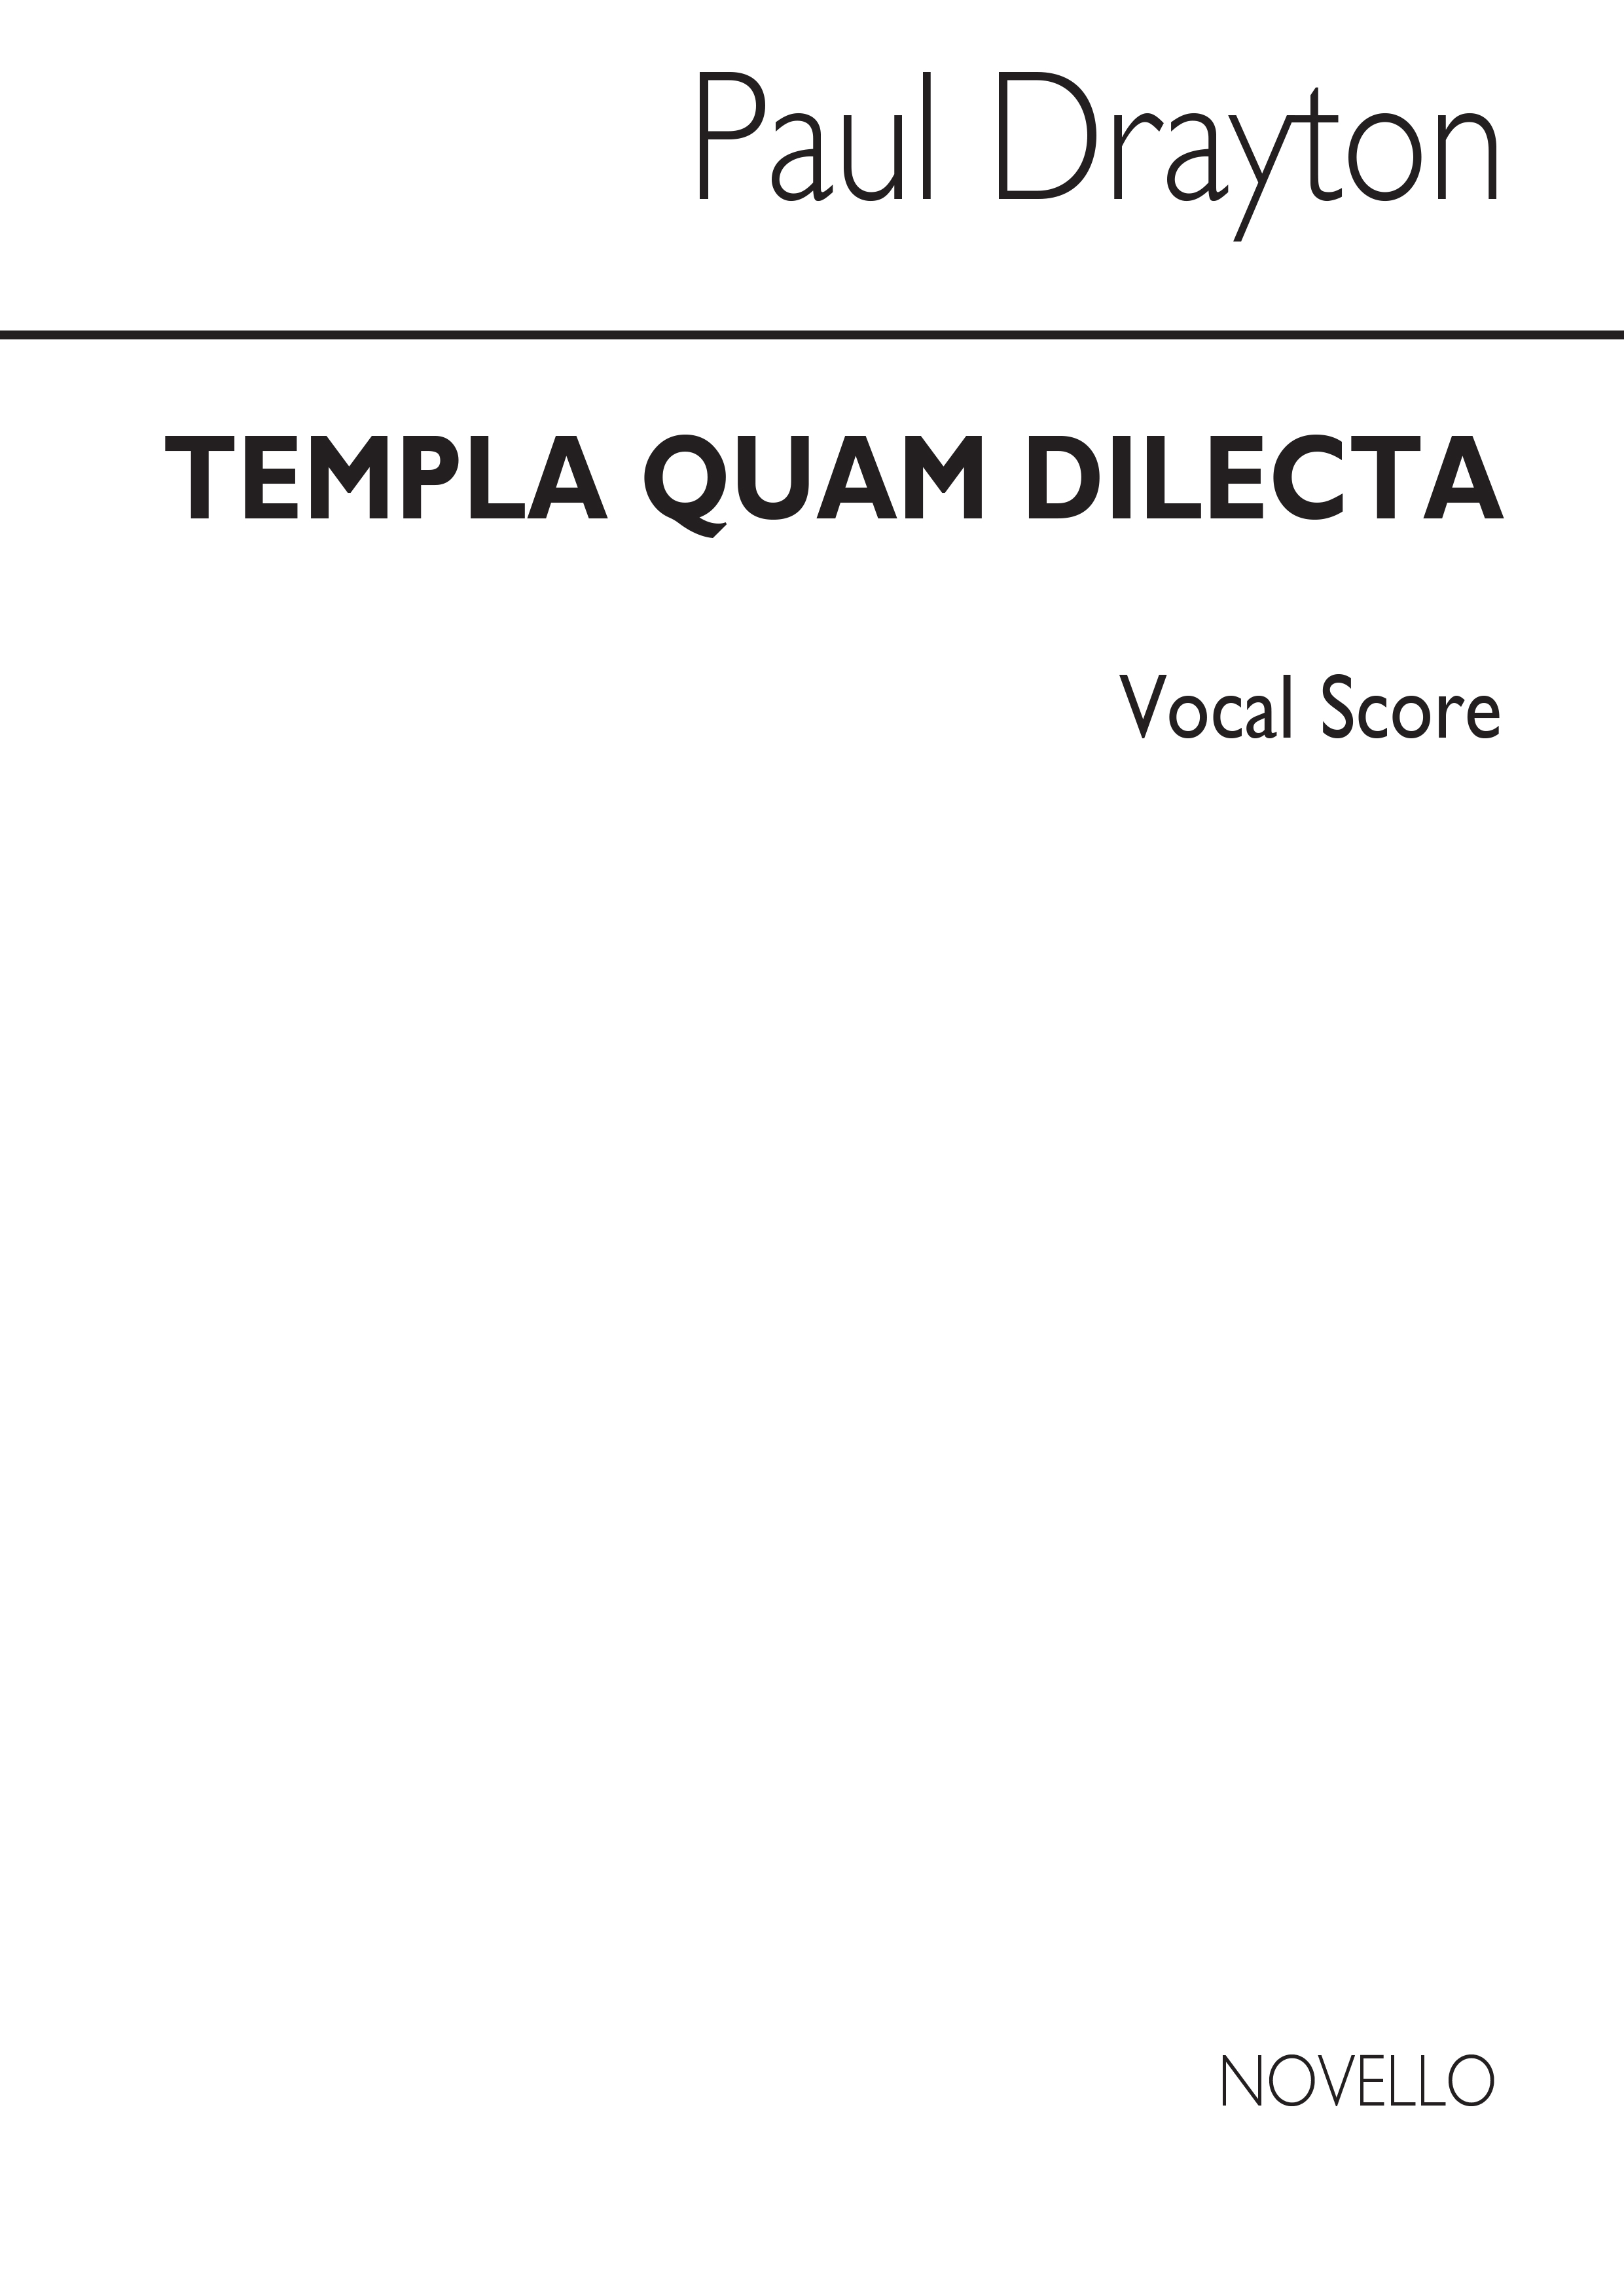 Paul Drayton: Templa Quam Dilecta (Vocal Score)